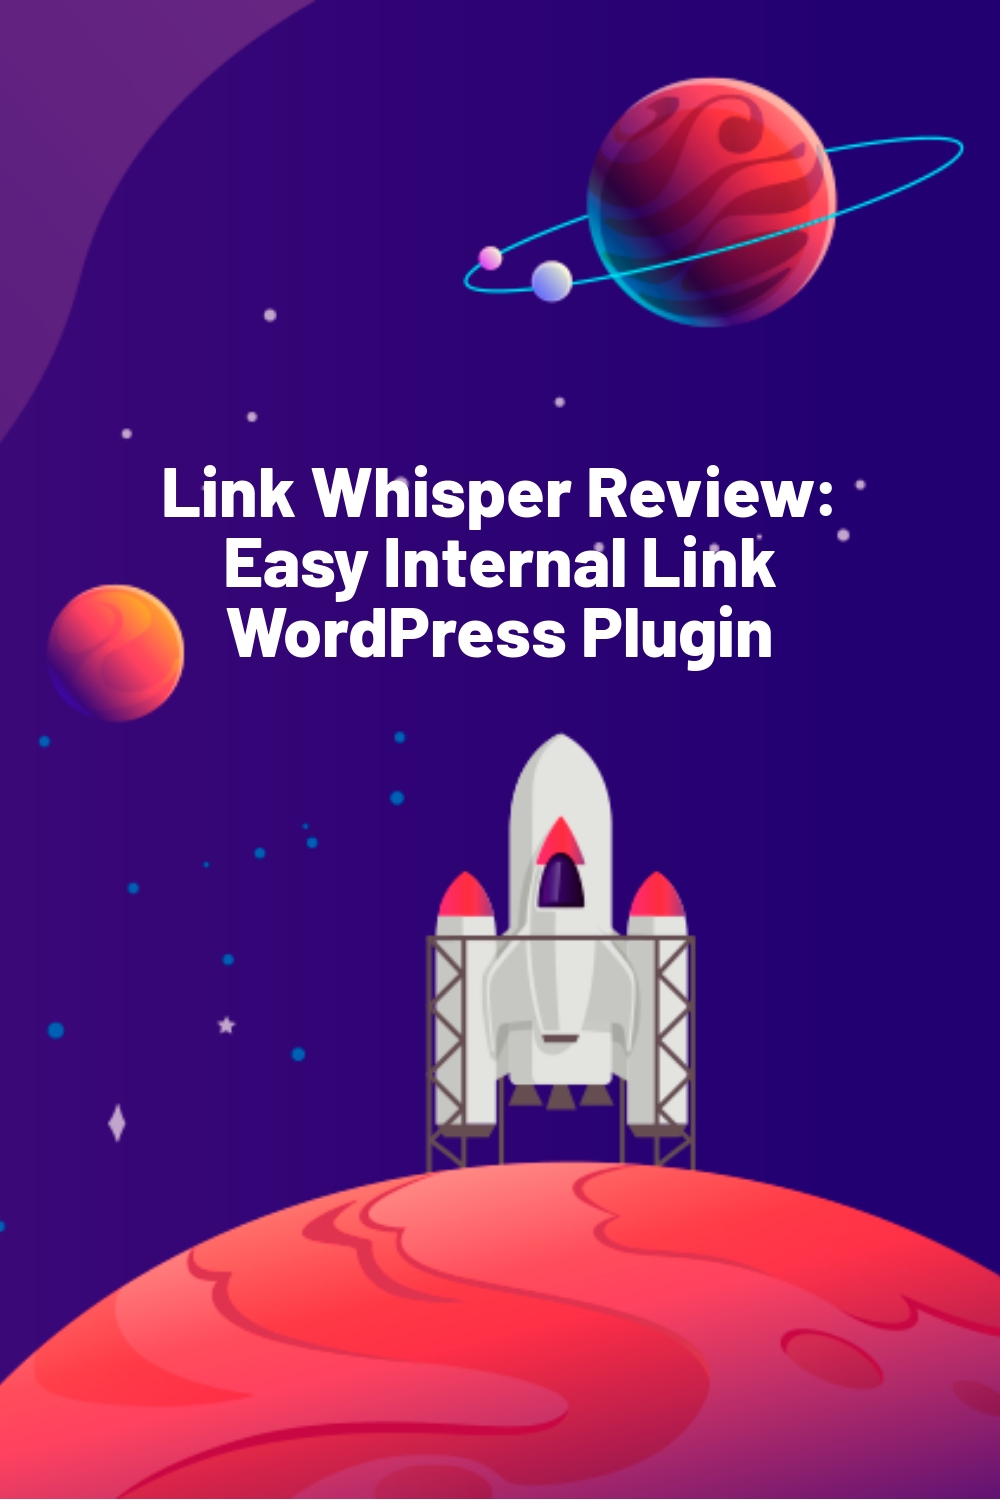 Link Whisper Review: Easy Internal Link WordPress Plugin